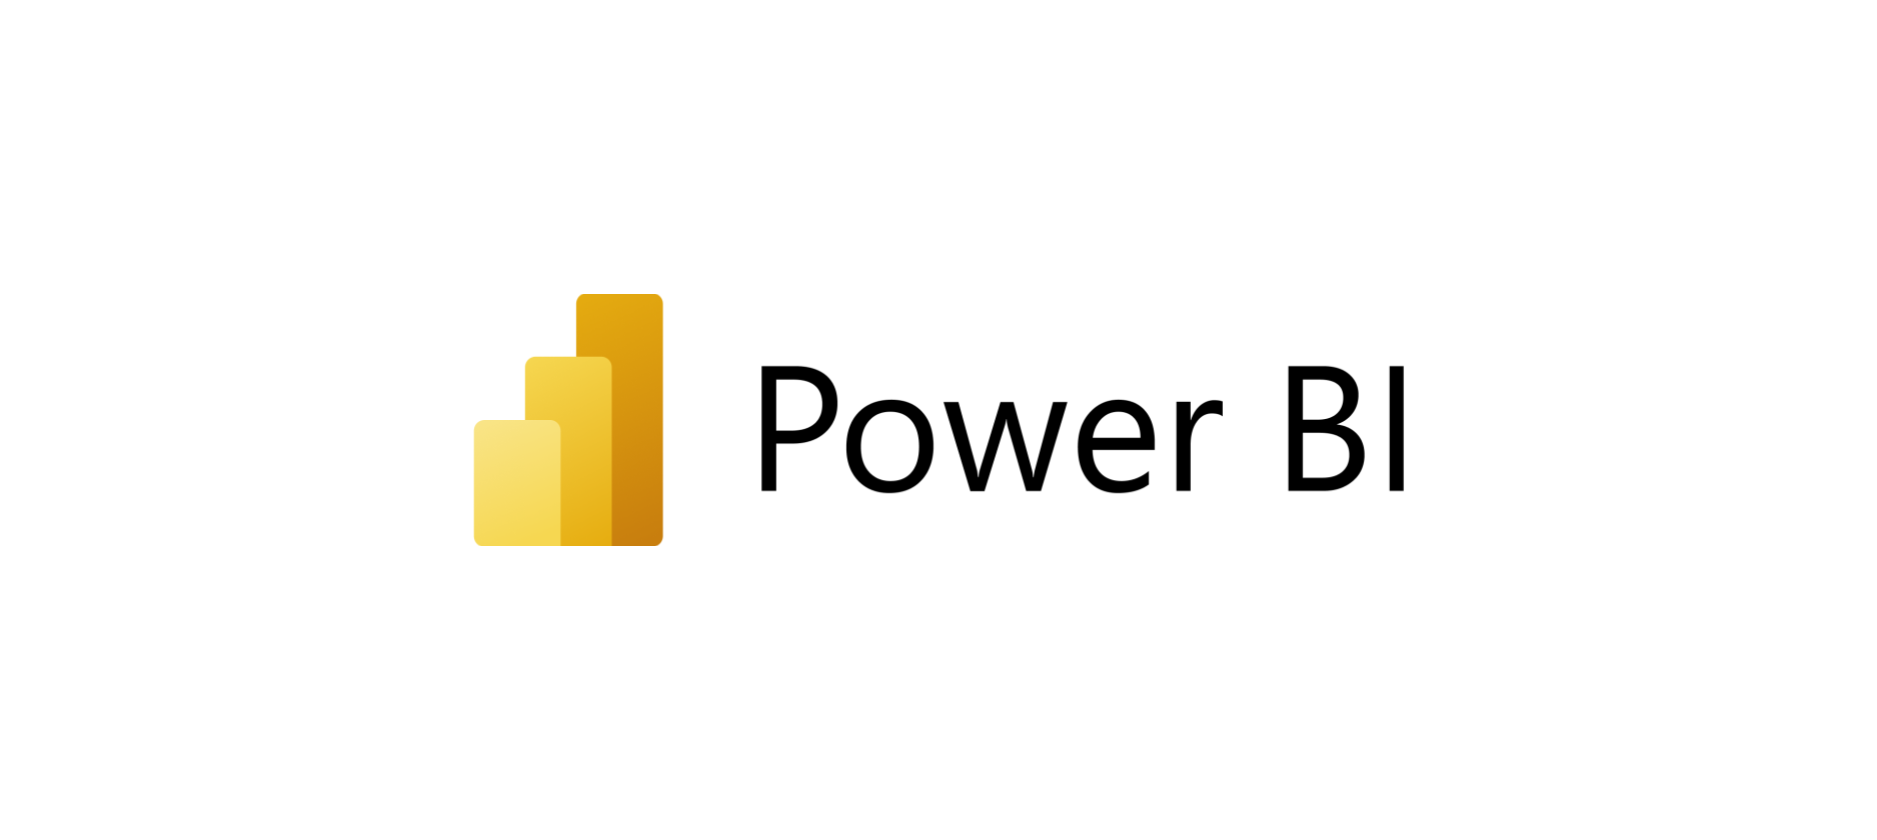 Business Intelligence - Power BI - ready